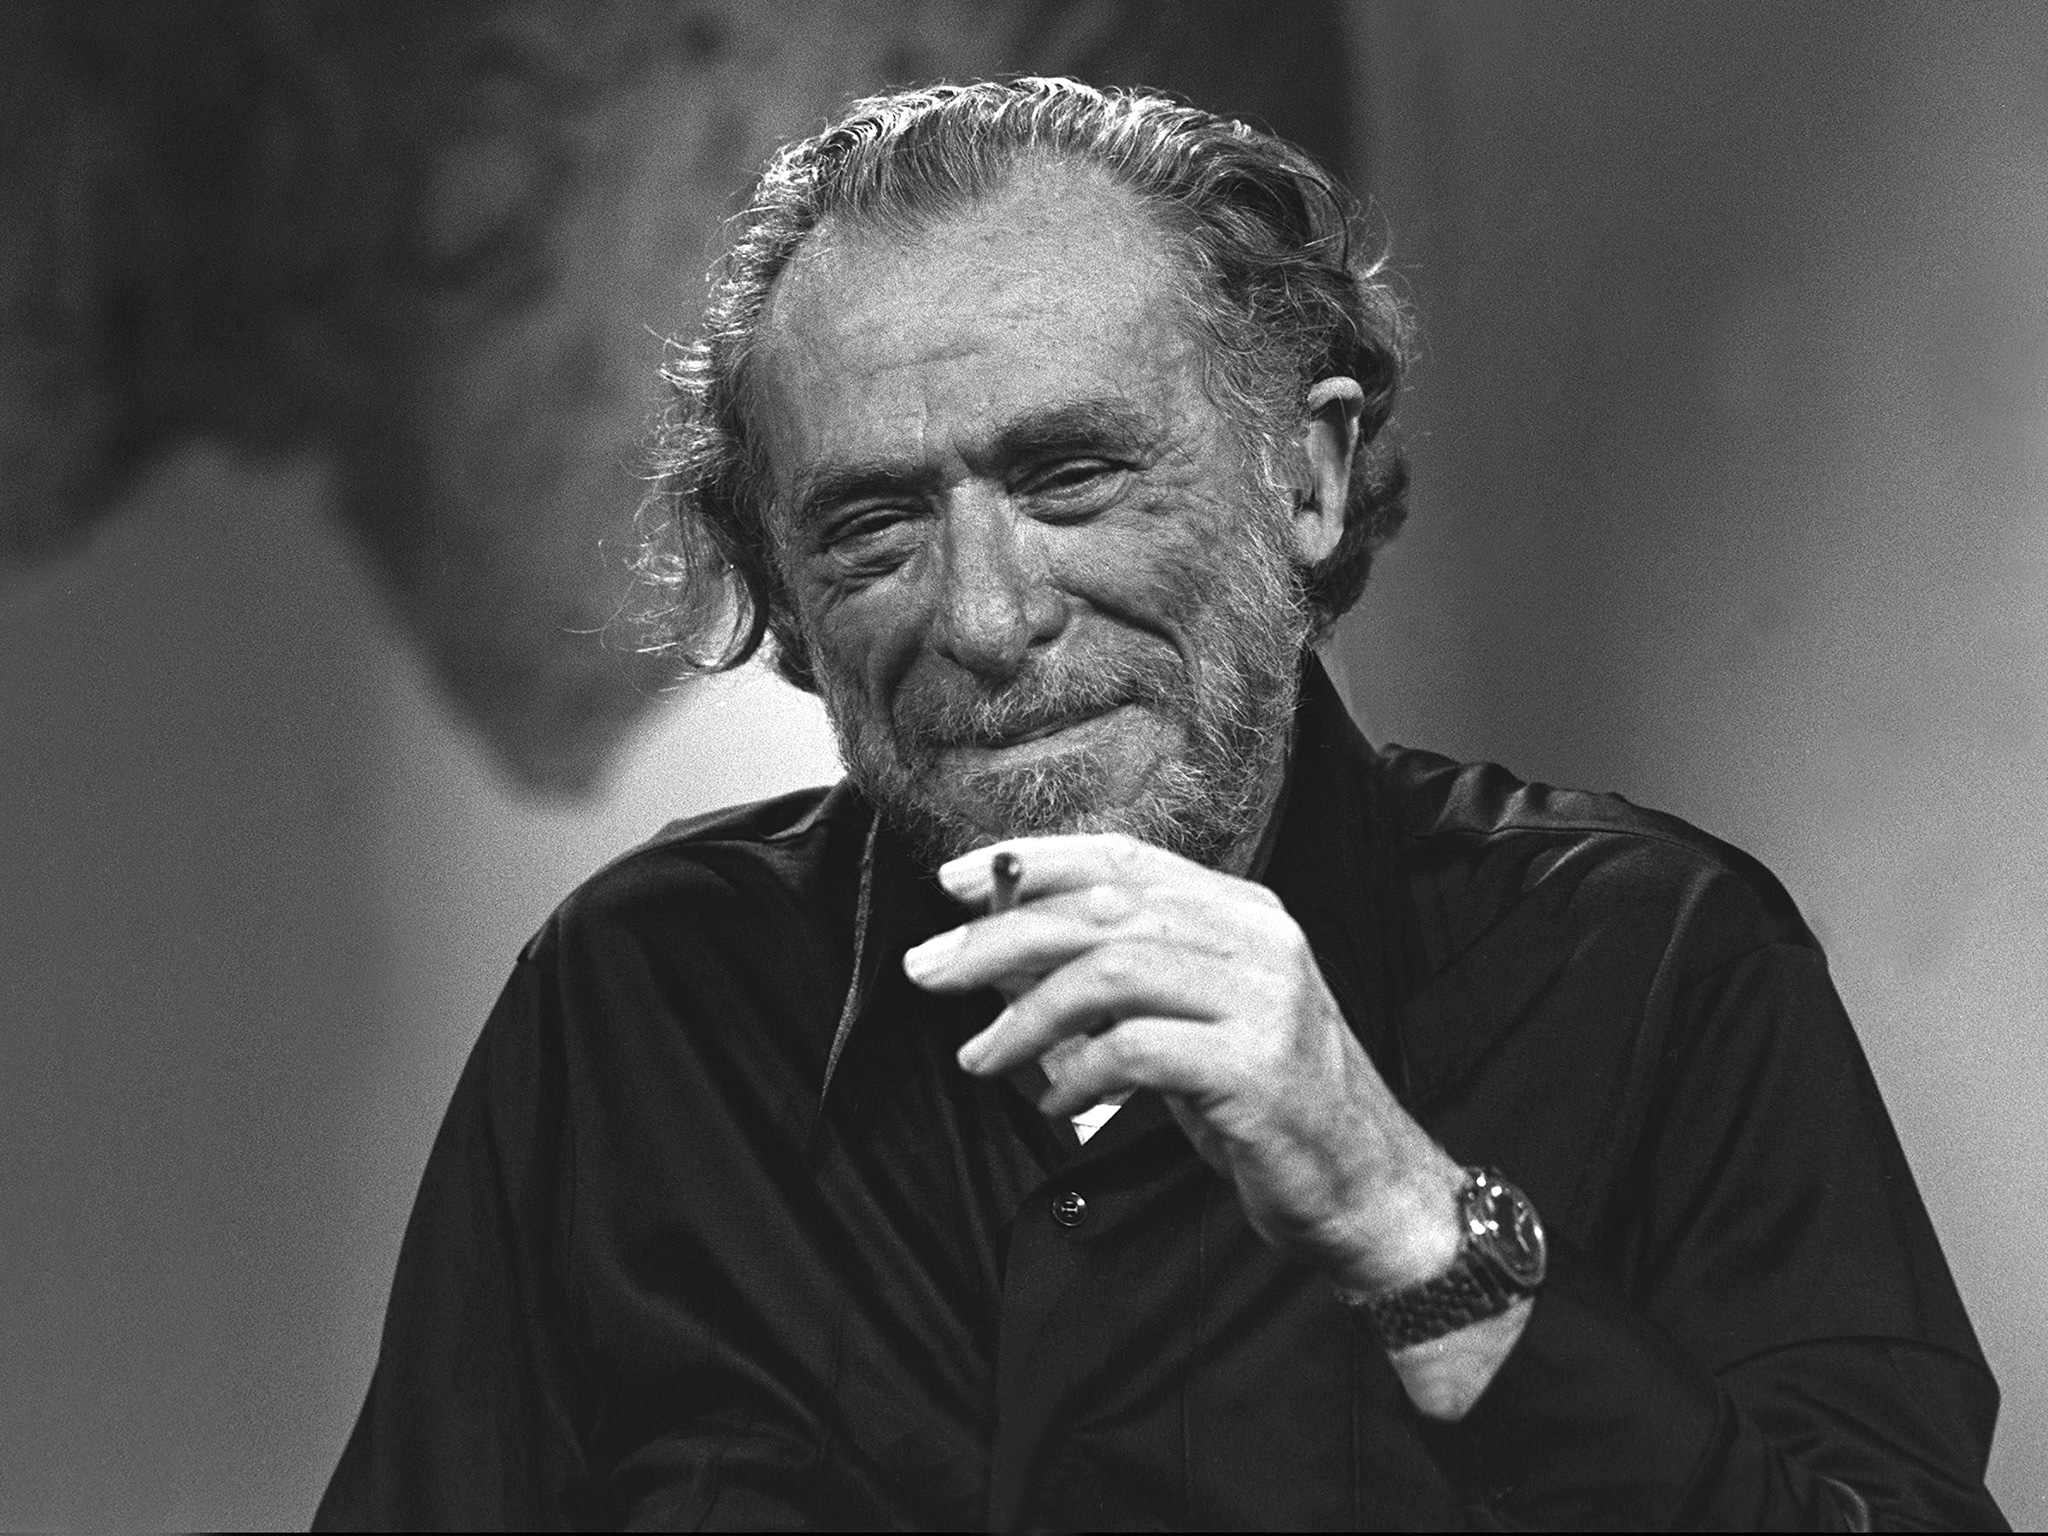 Charles Bukowski - SE UNA NOTTE D’INVERNO ALLA TENDA